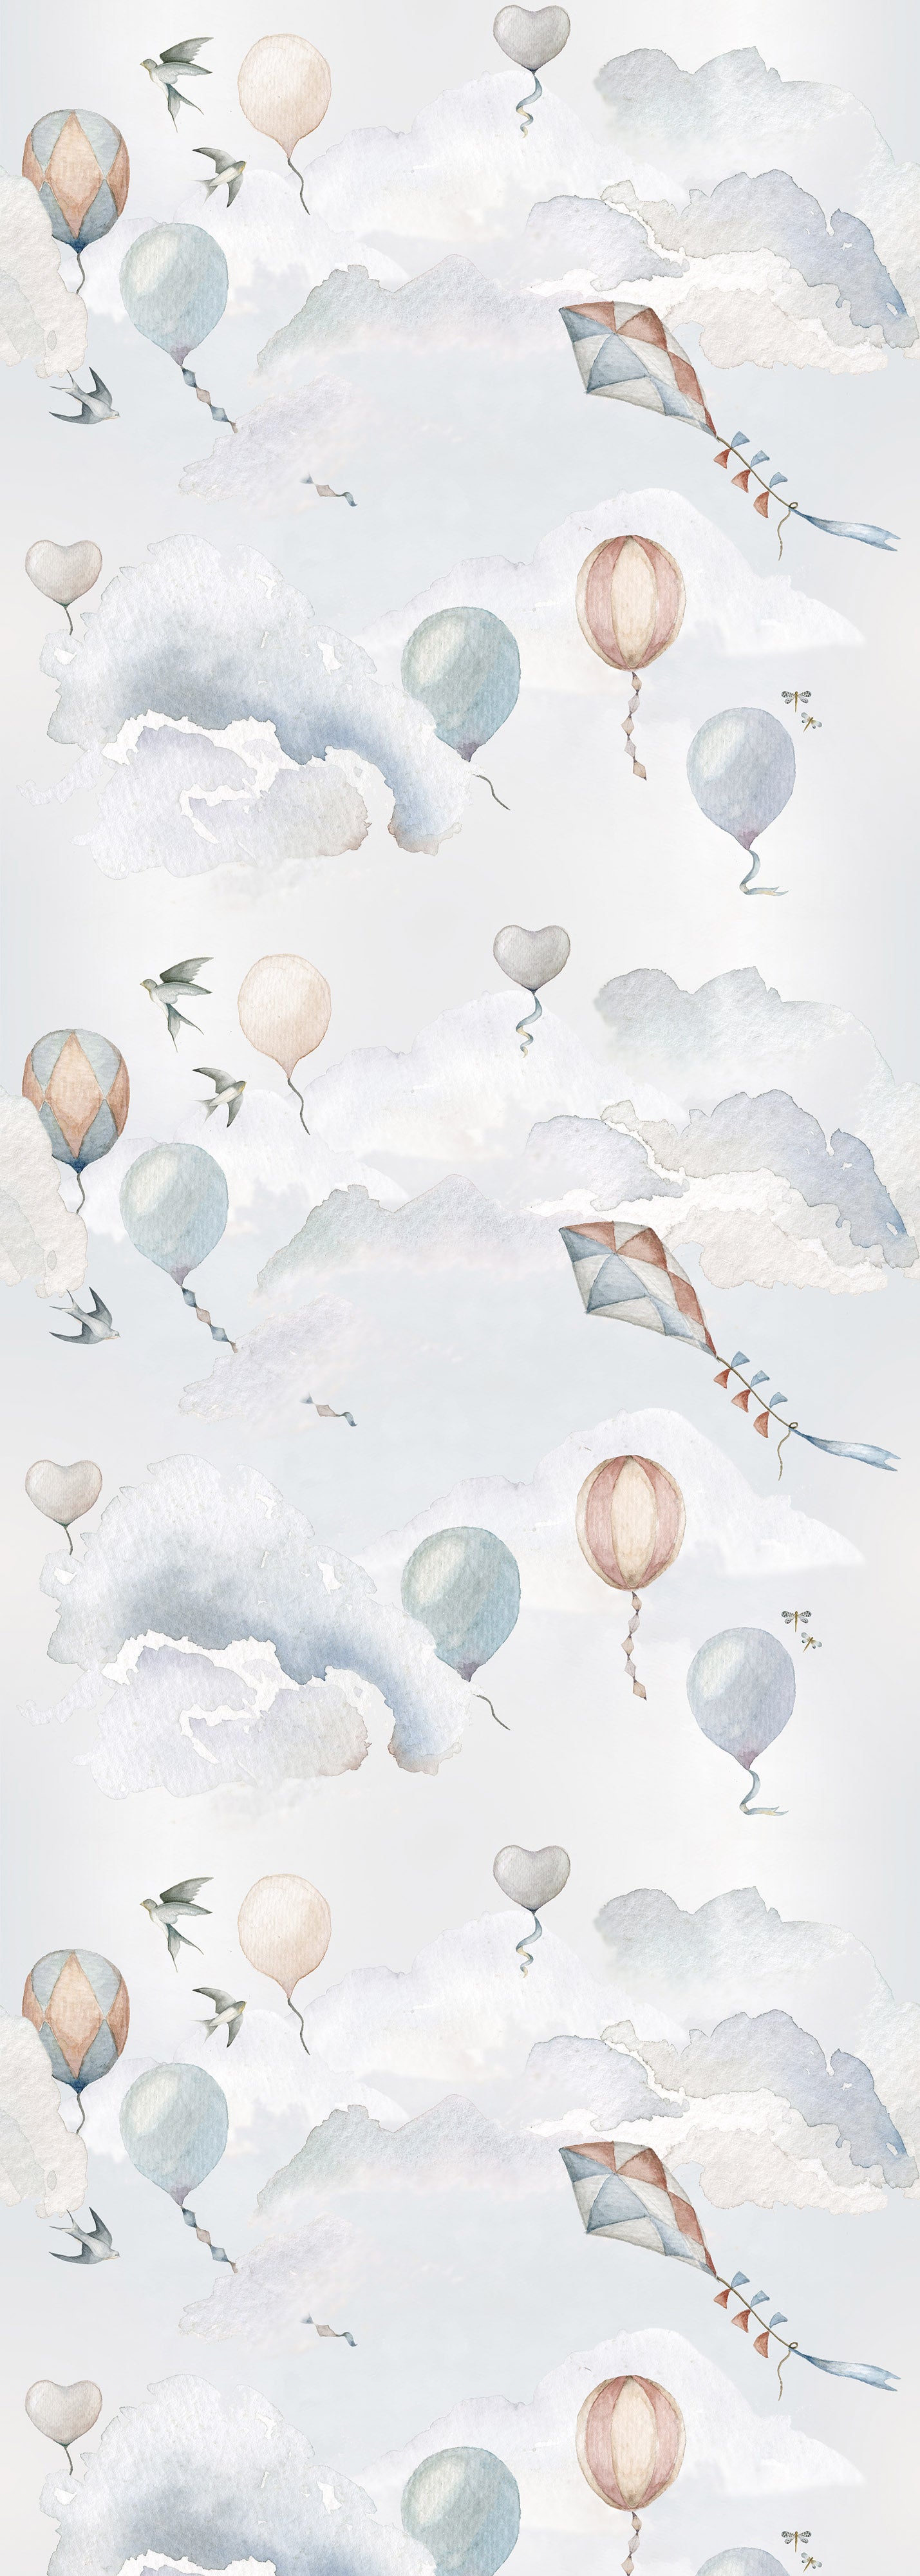 Dekornik Balloons Fairytale Wallpaper